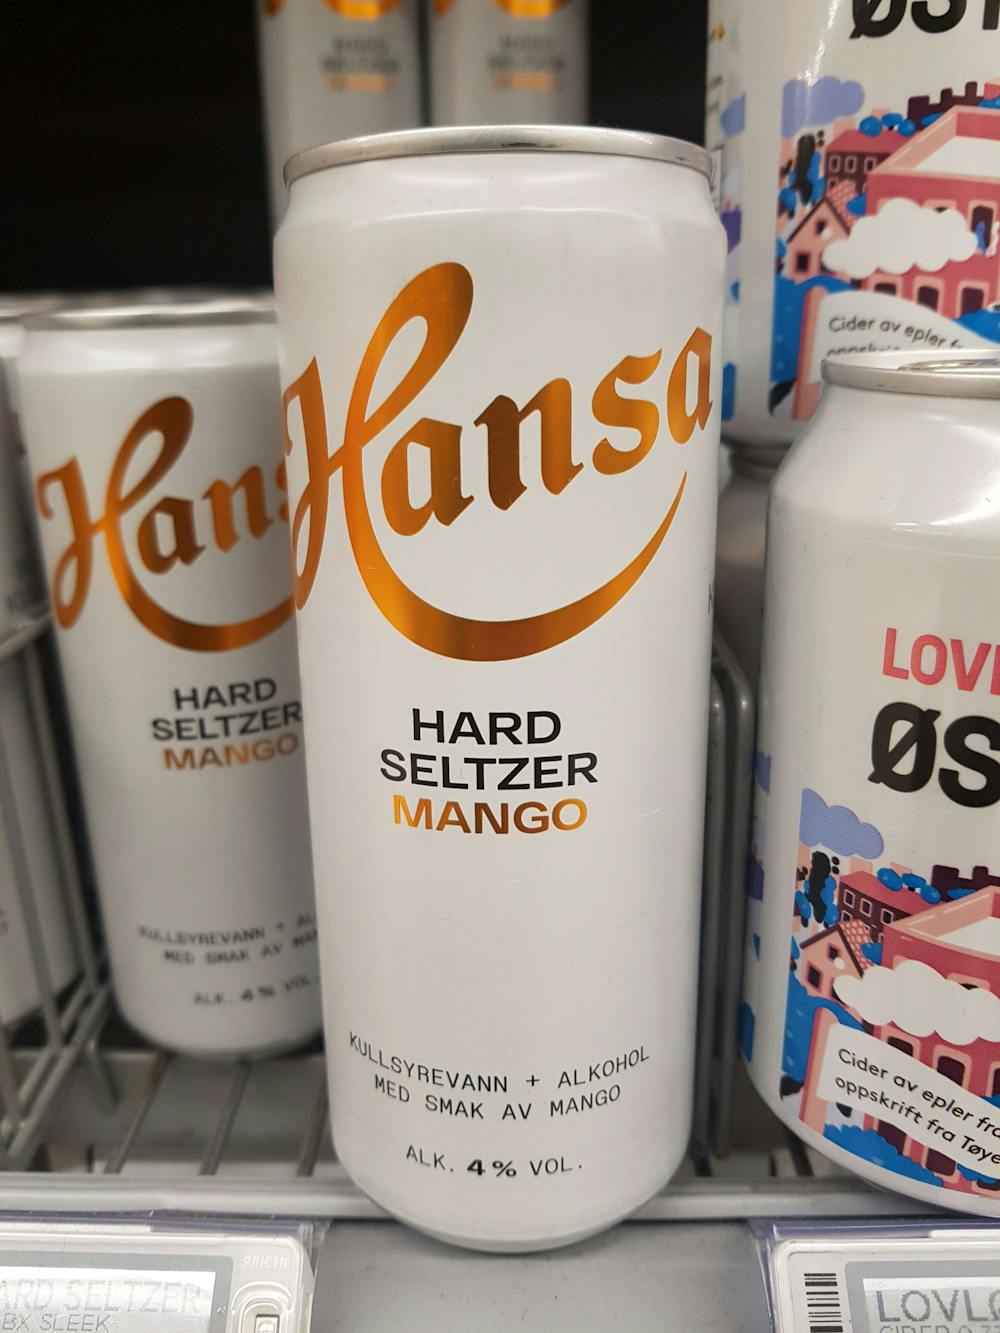 Hard setzer mango, Hansa